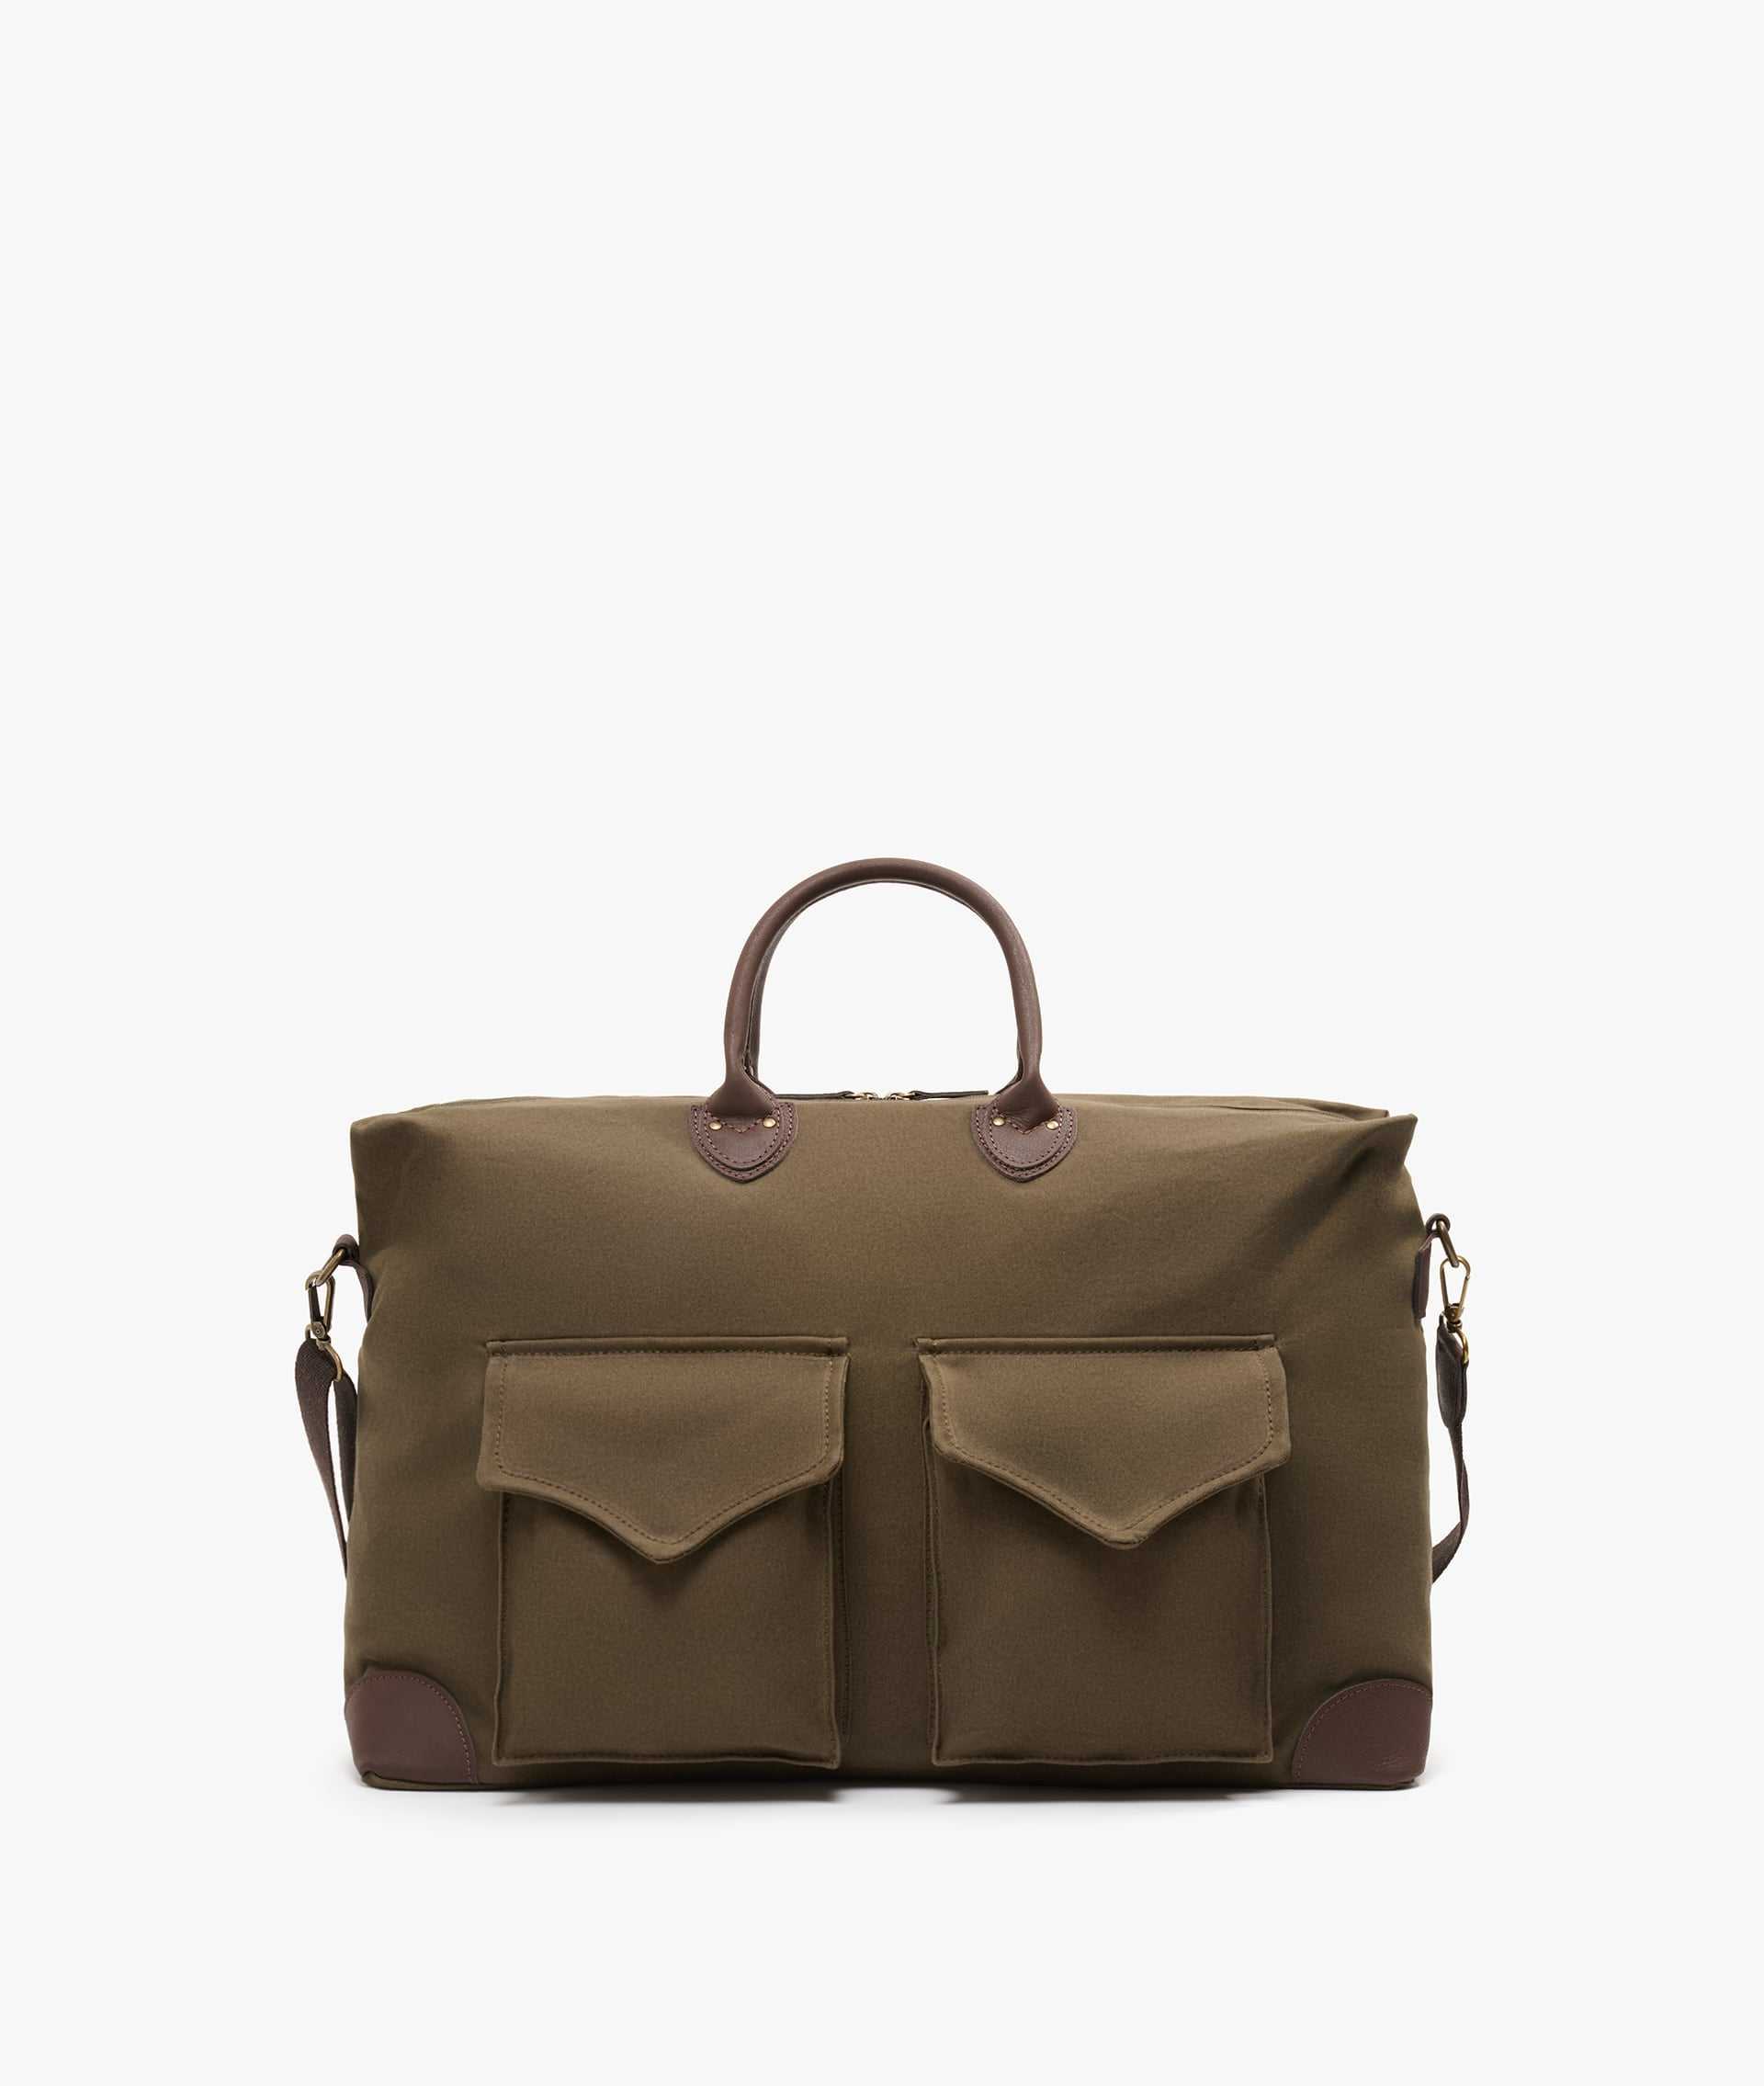 My Style Bags Harvard Safari